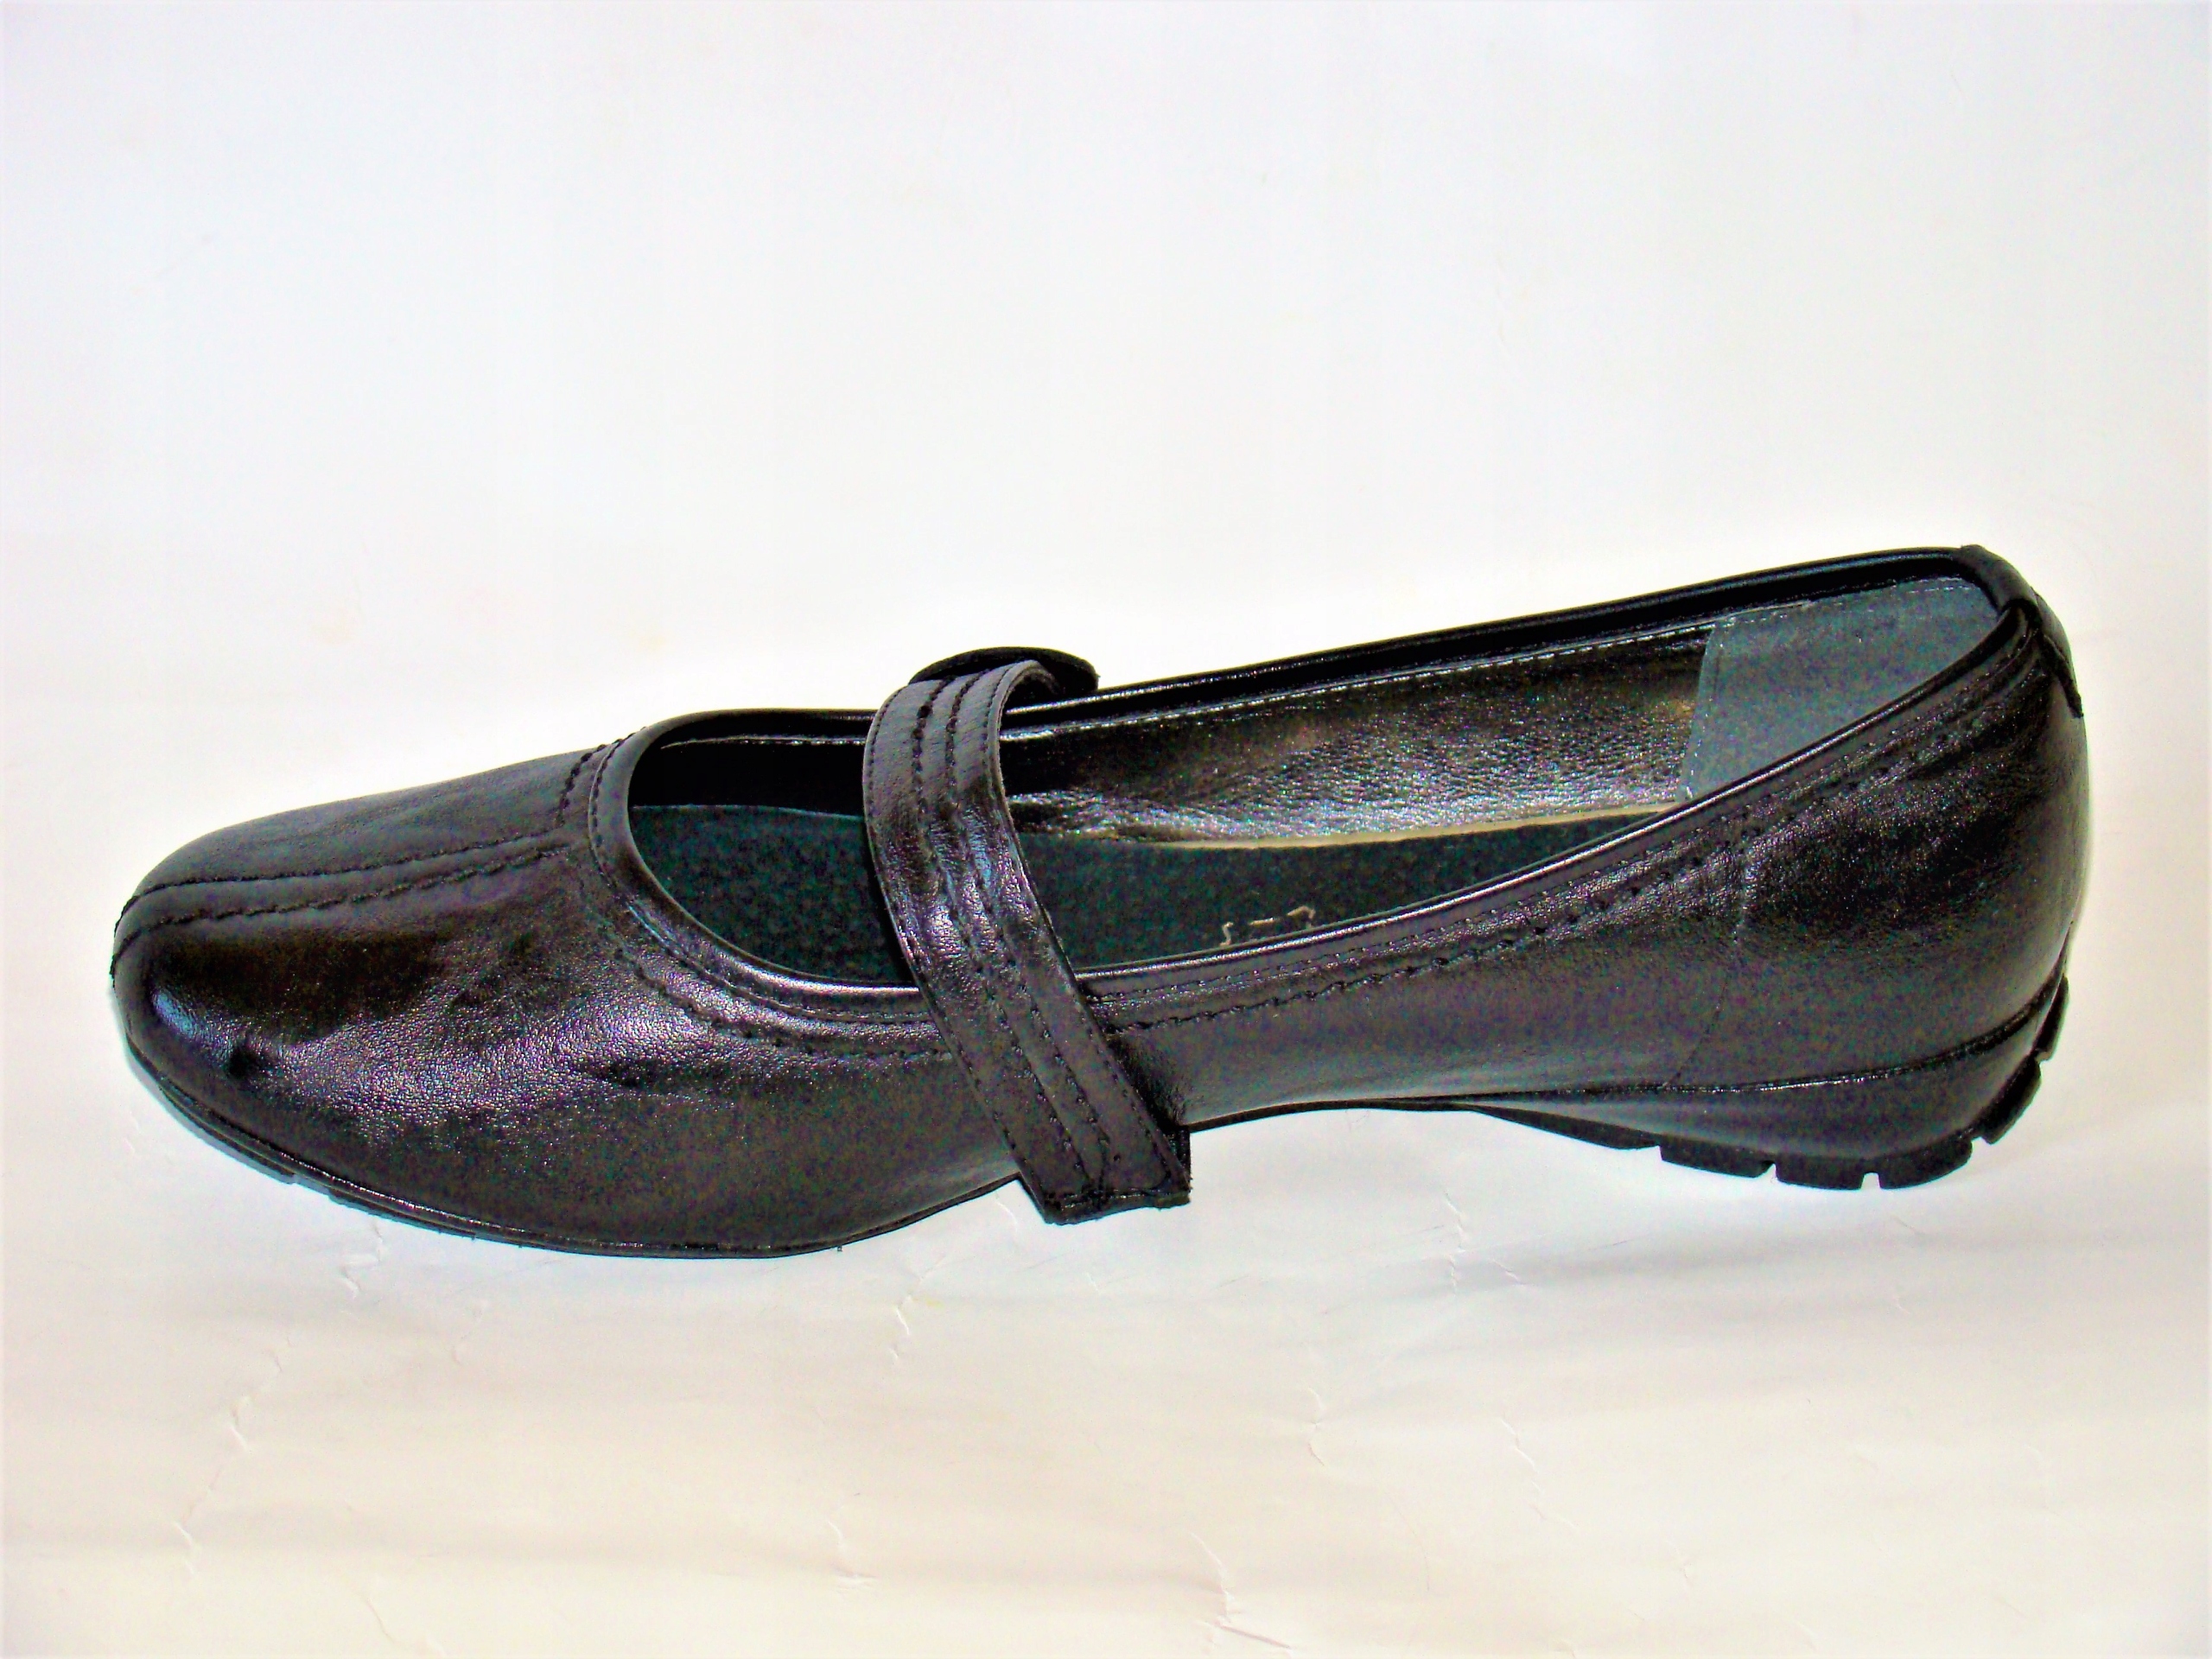 BOSHIMAO BALERINY 37 buty damskie czarne półbuty 8154509541 - Allegro.pl